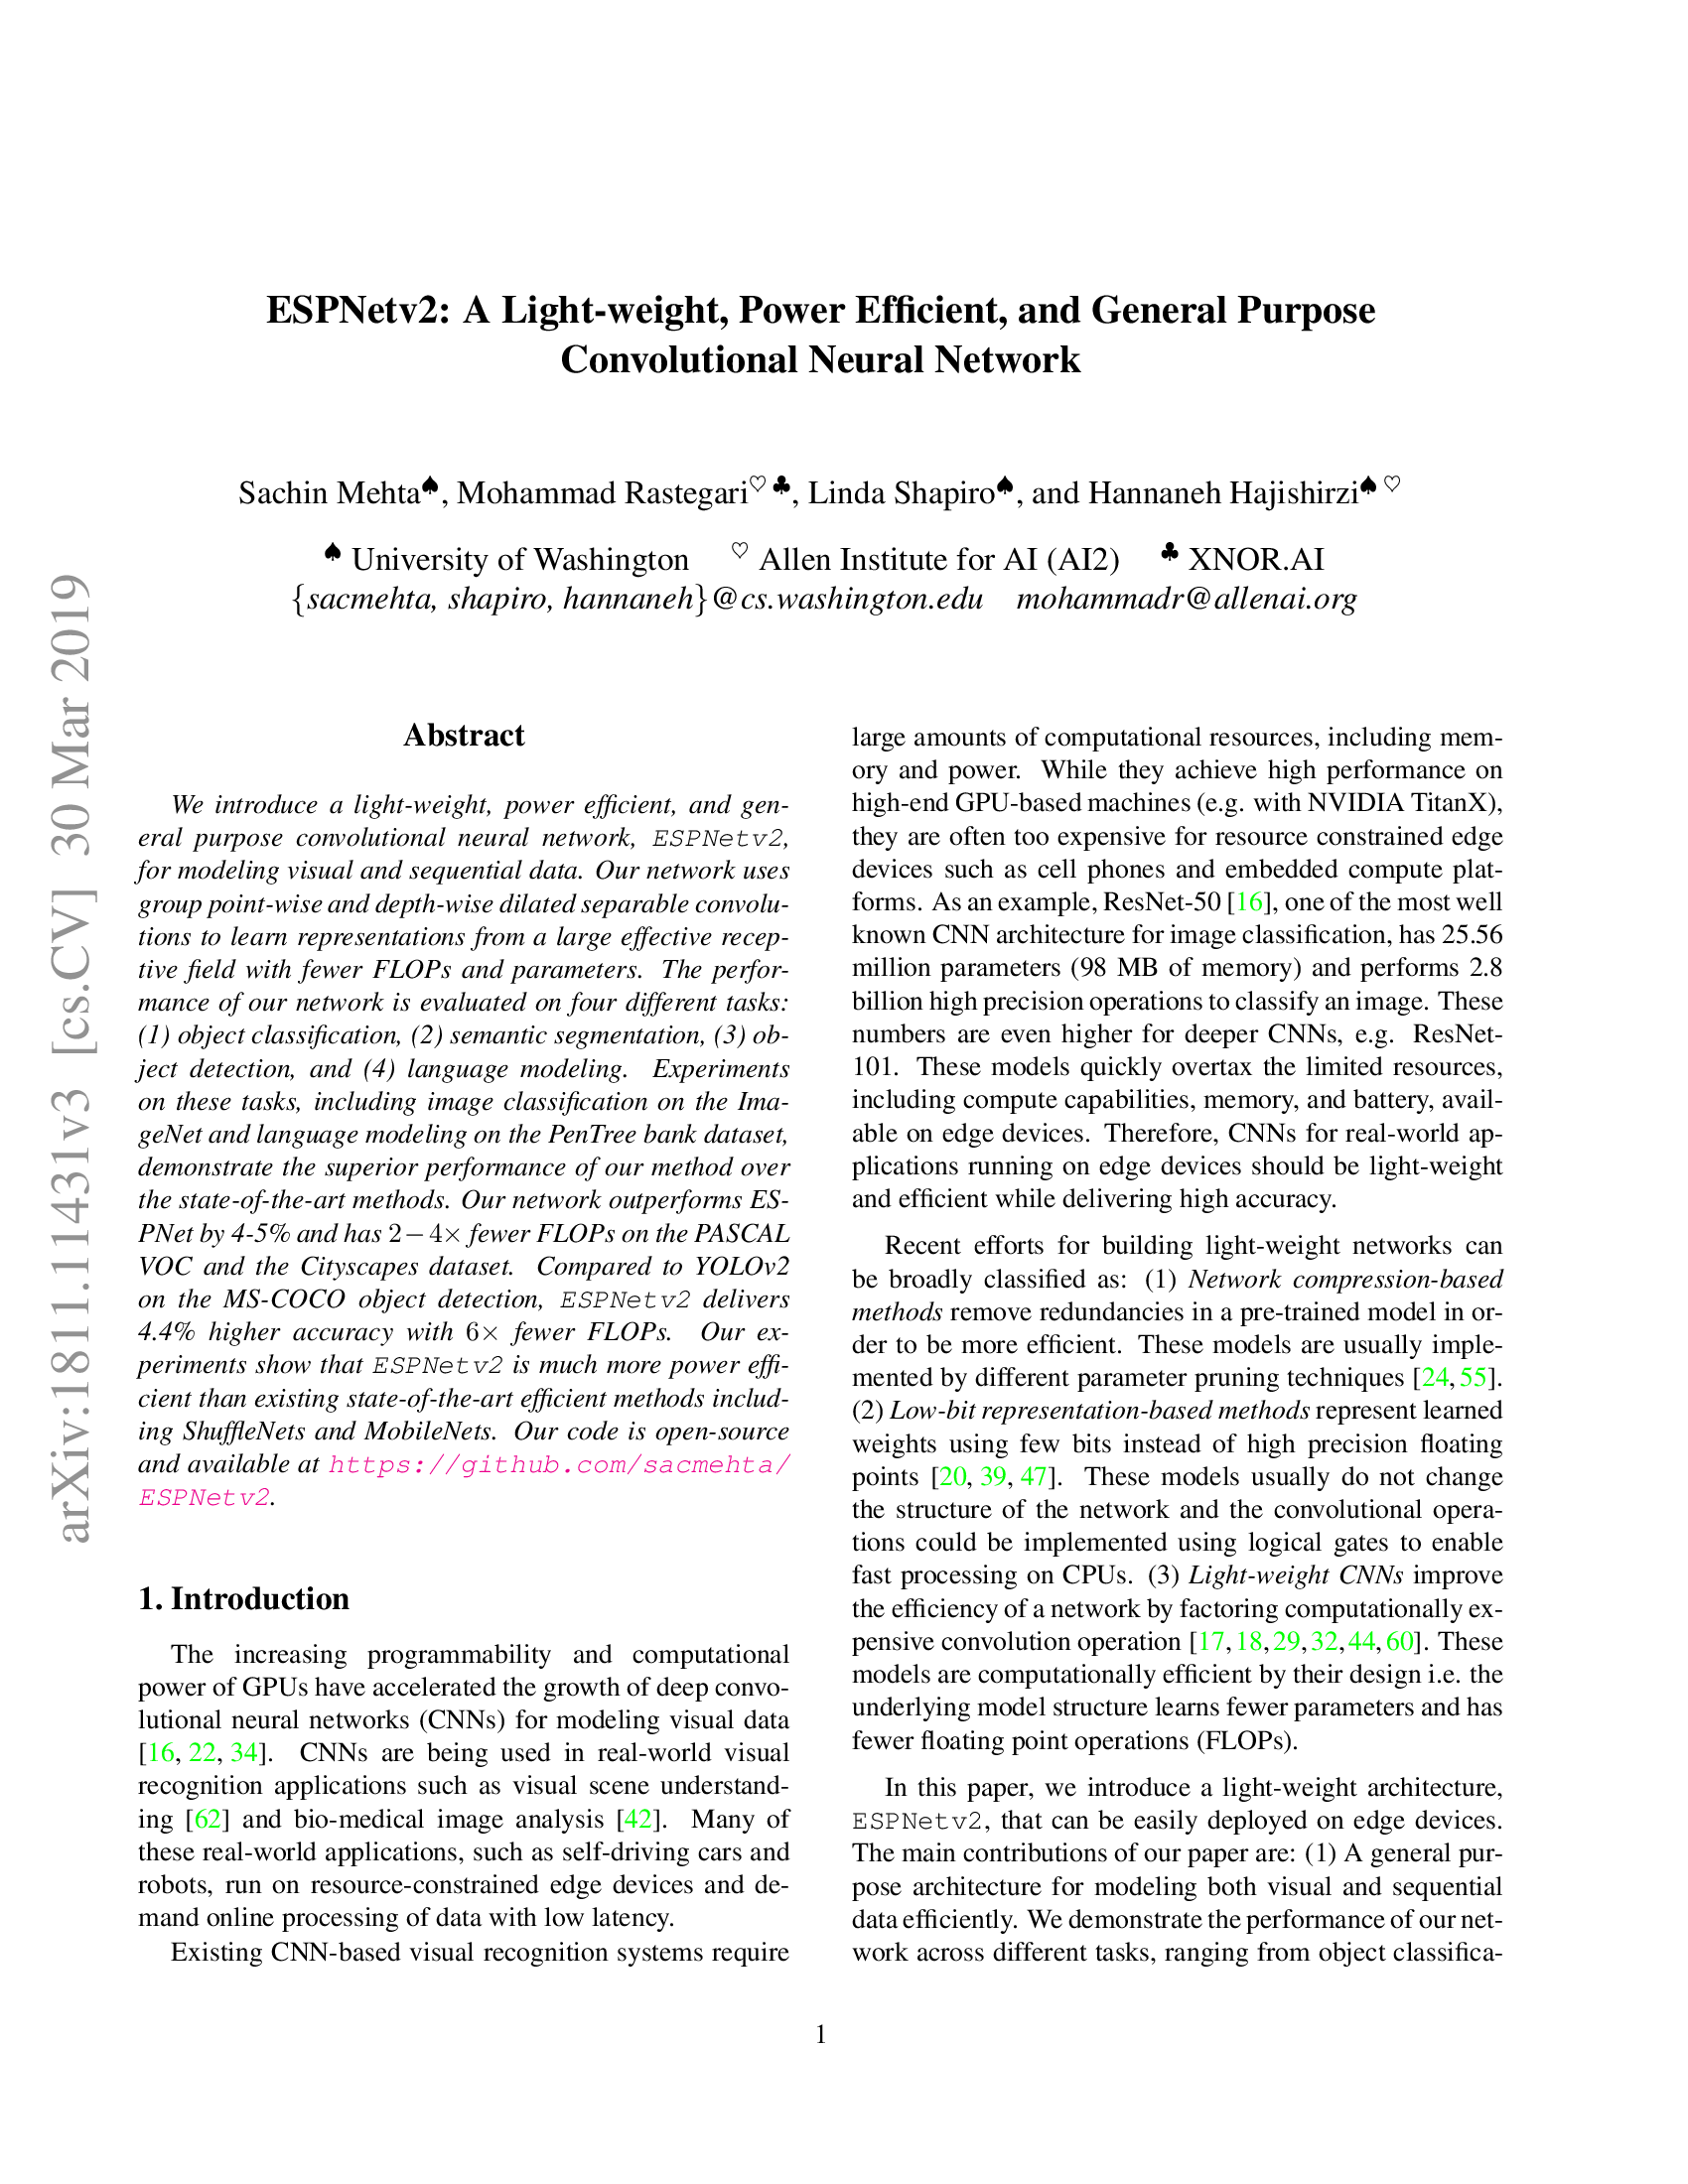 ESPNetv2: A Light-Weight, Power Efficient, and General Purpose Convolutional Neural Network